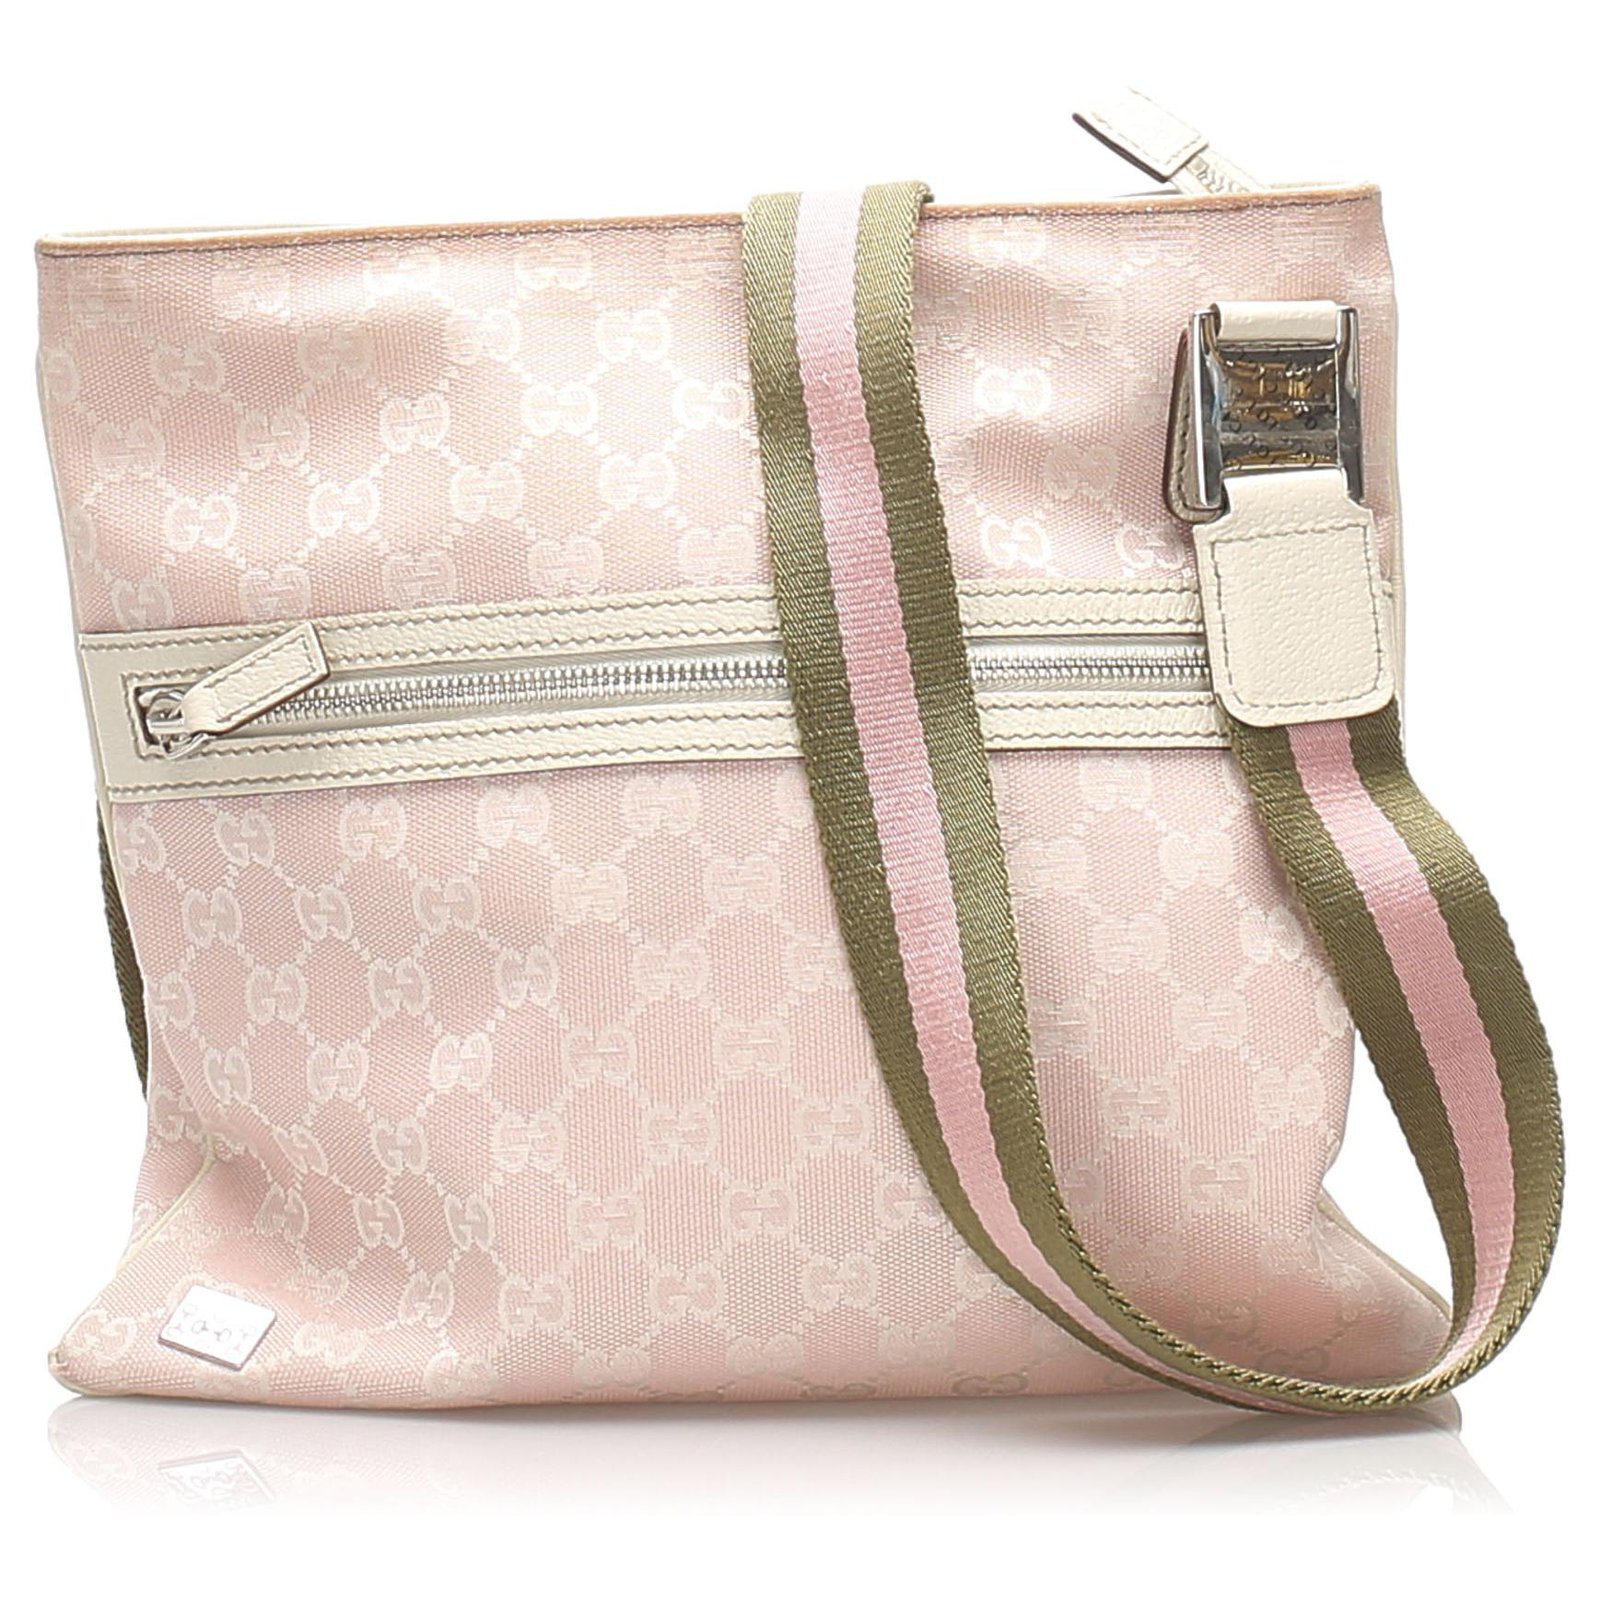 Gucci Pink Dollar Bag  Luxury Reveal  Gucci handbags pink Pink gucci bag  Pink handbags